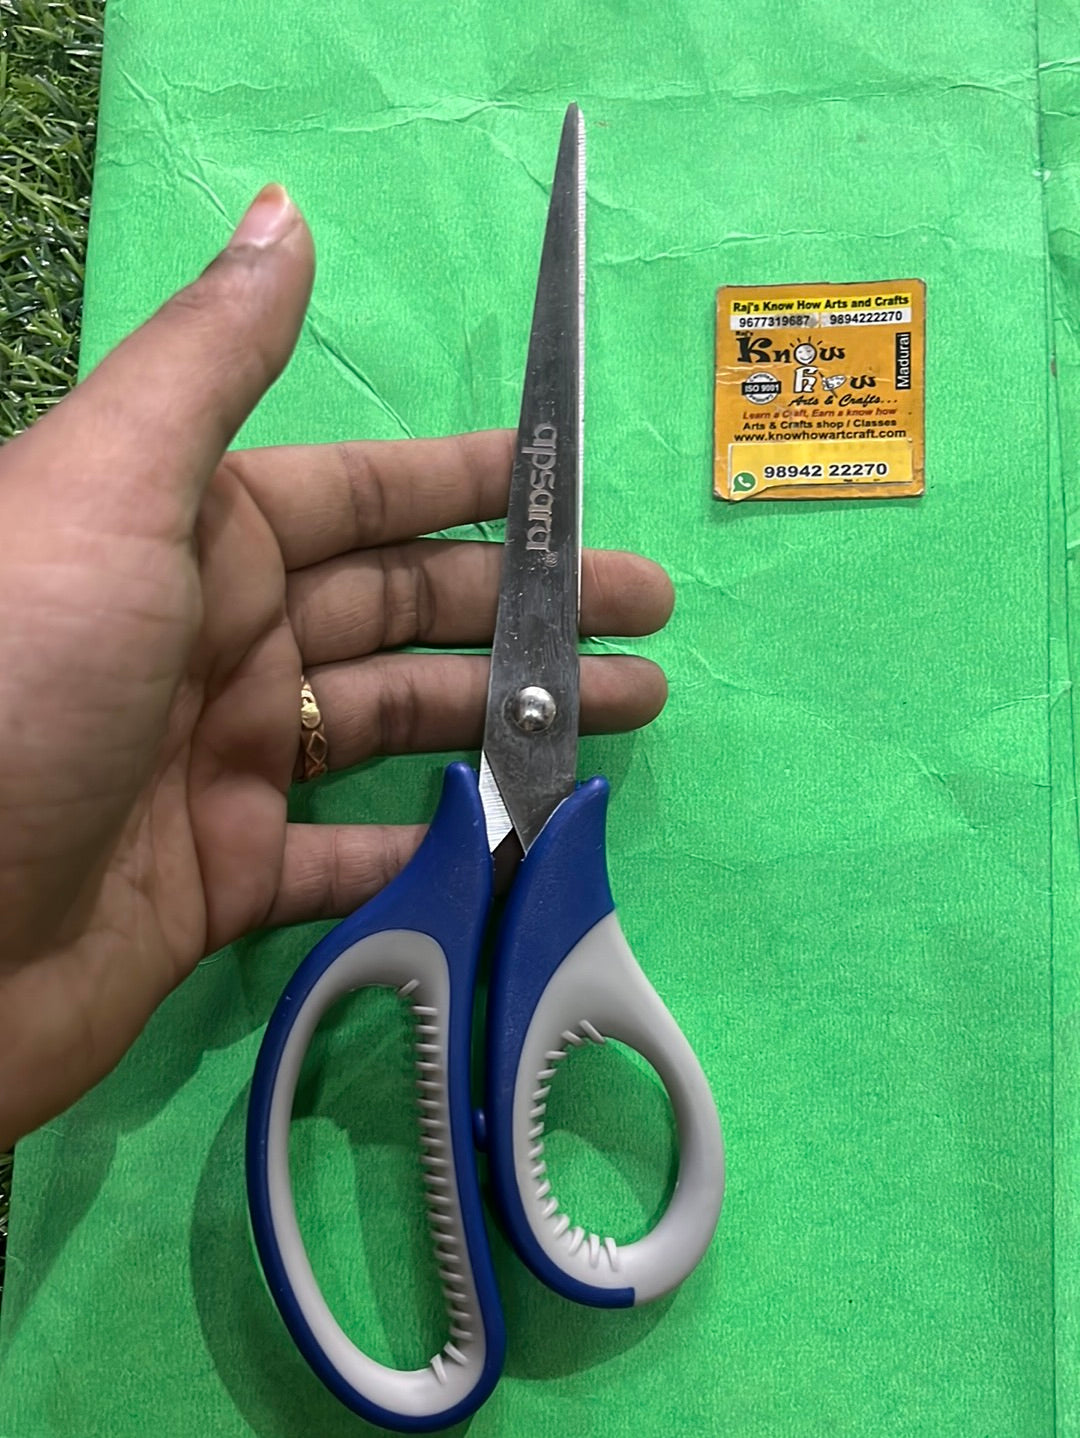 Apsara Blunt end Kids scissors - large